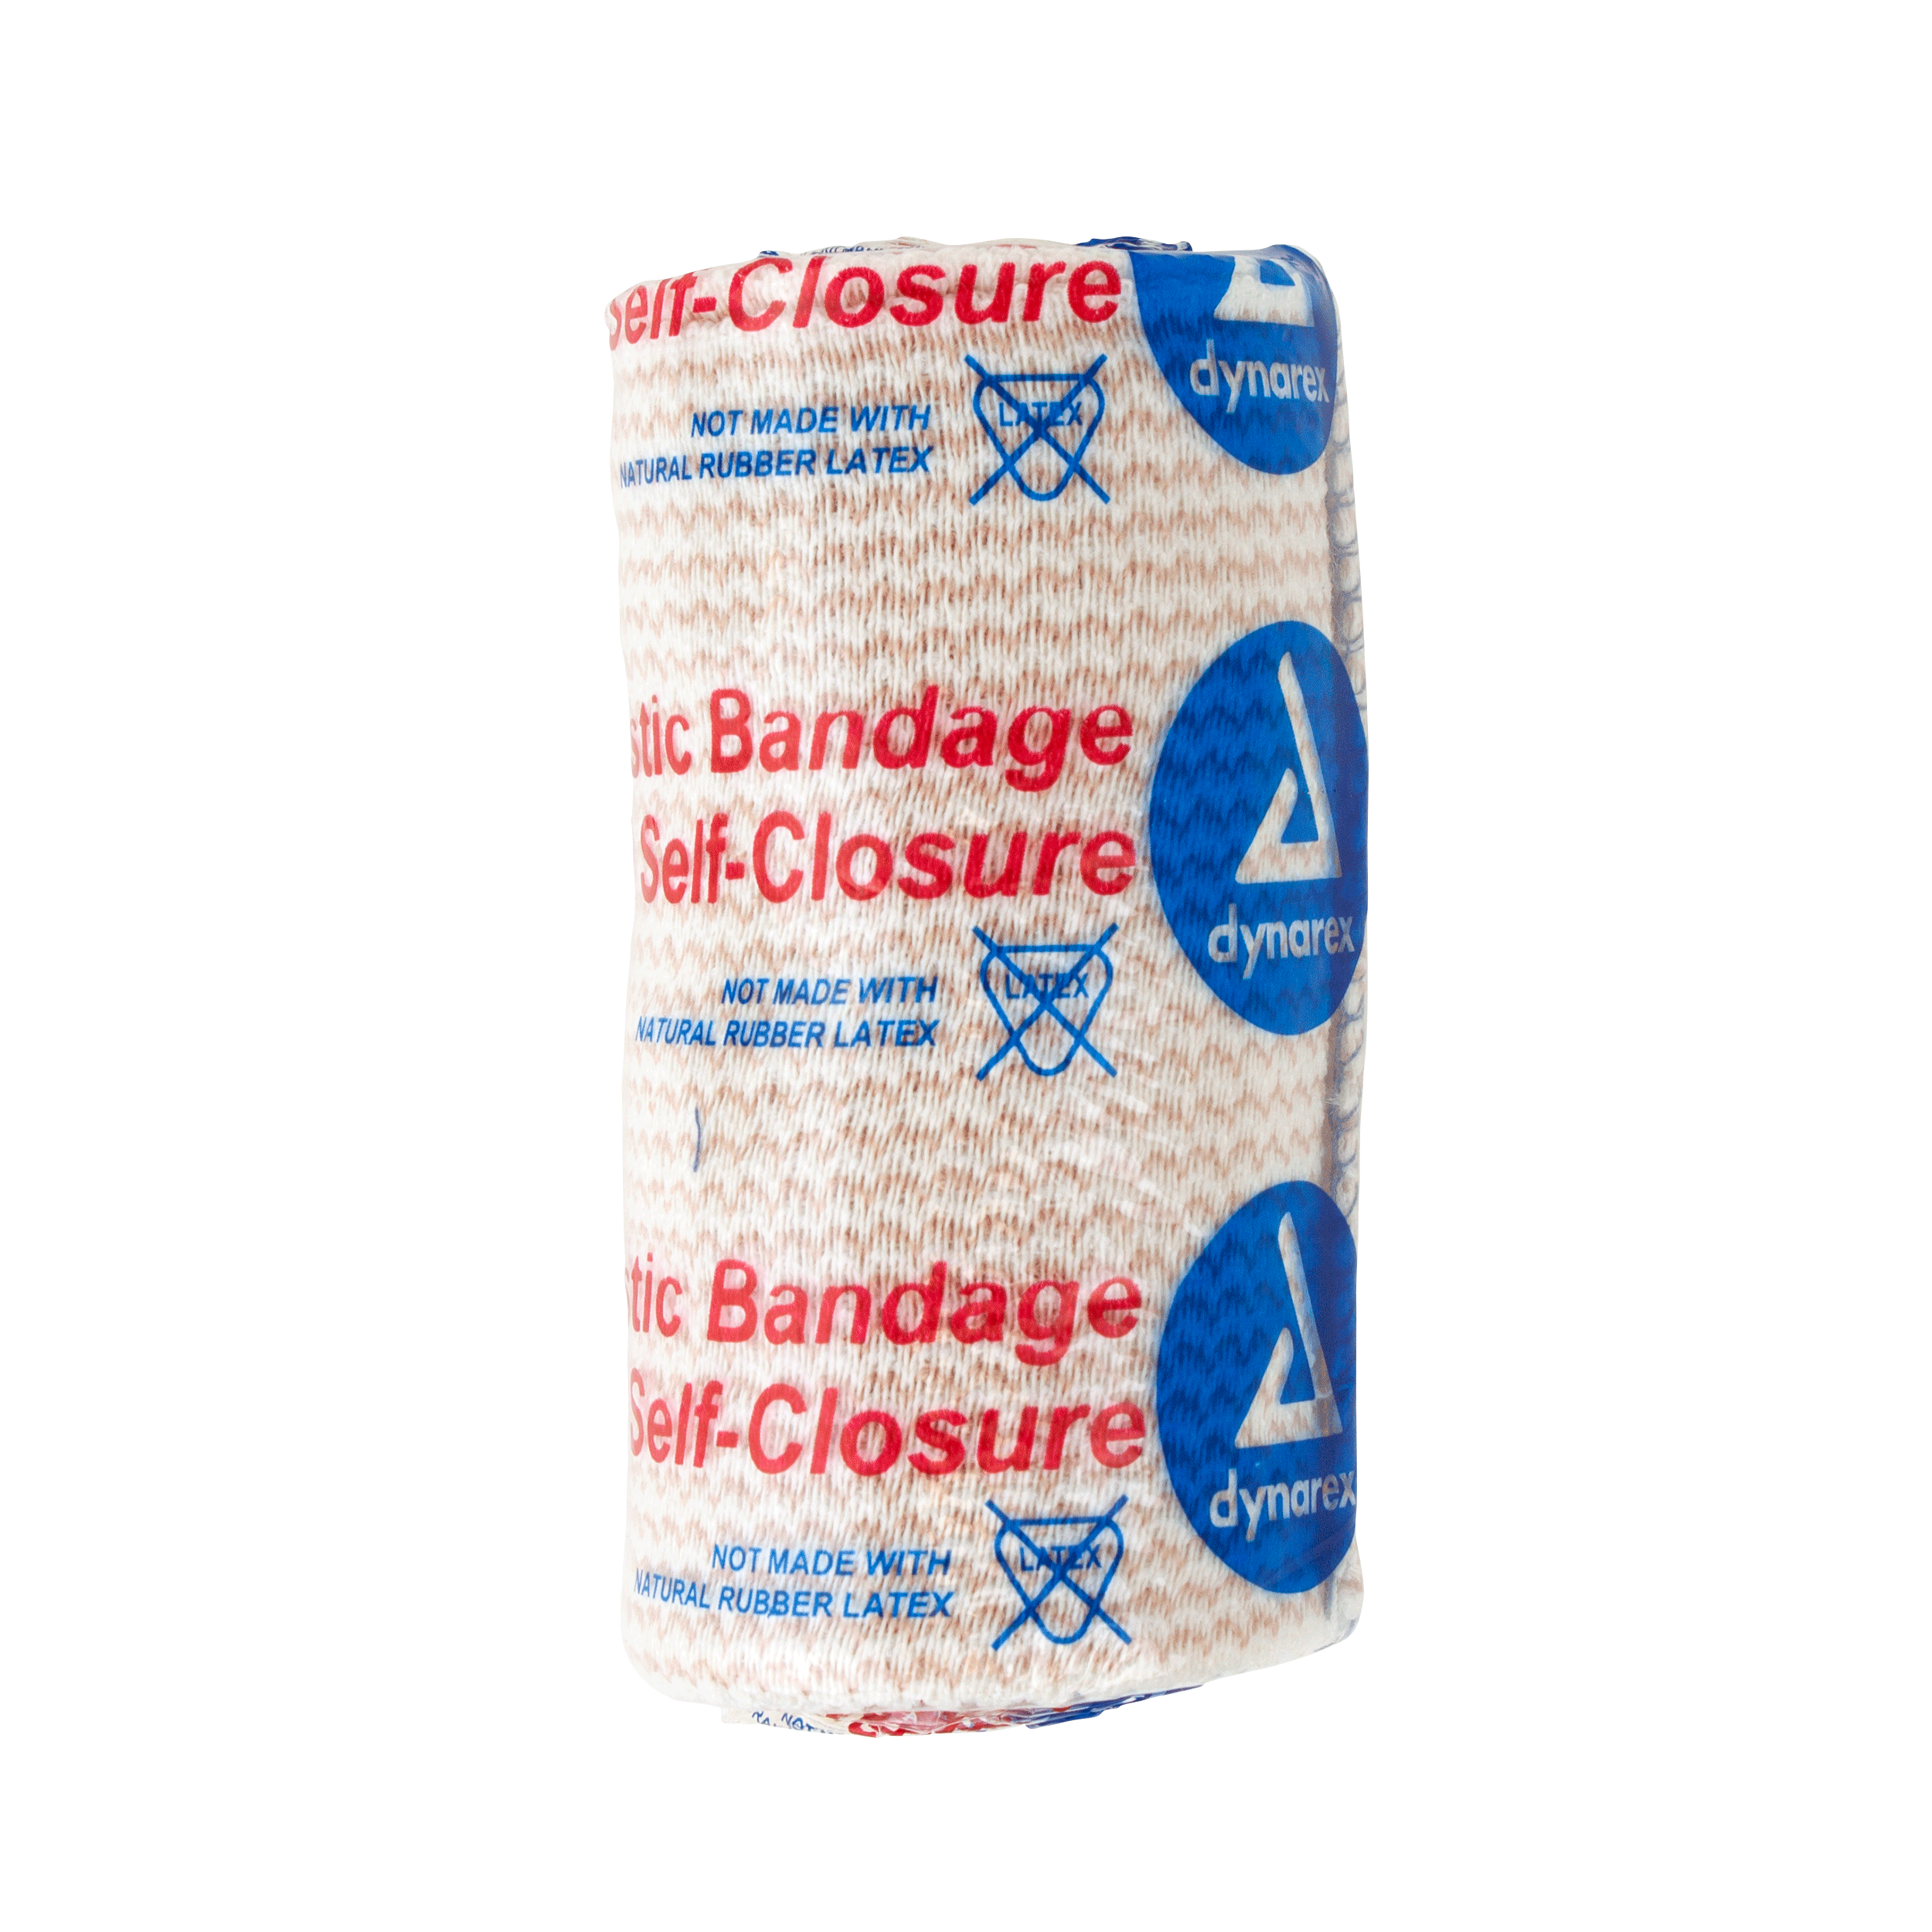 Elastic Bandage With Self-Closure 4in X 5yd.